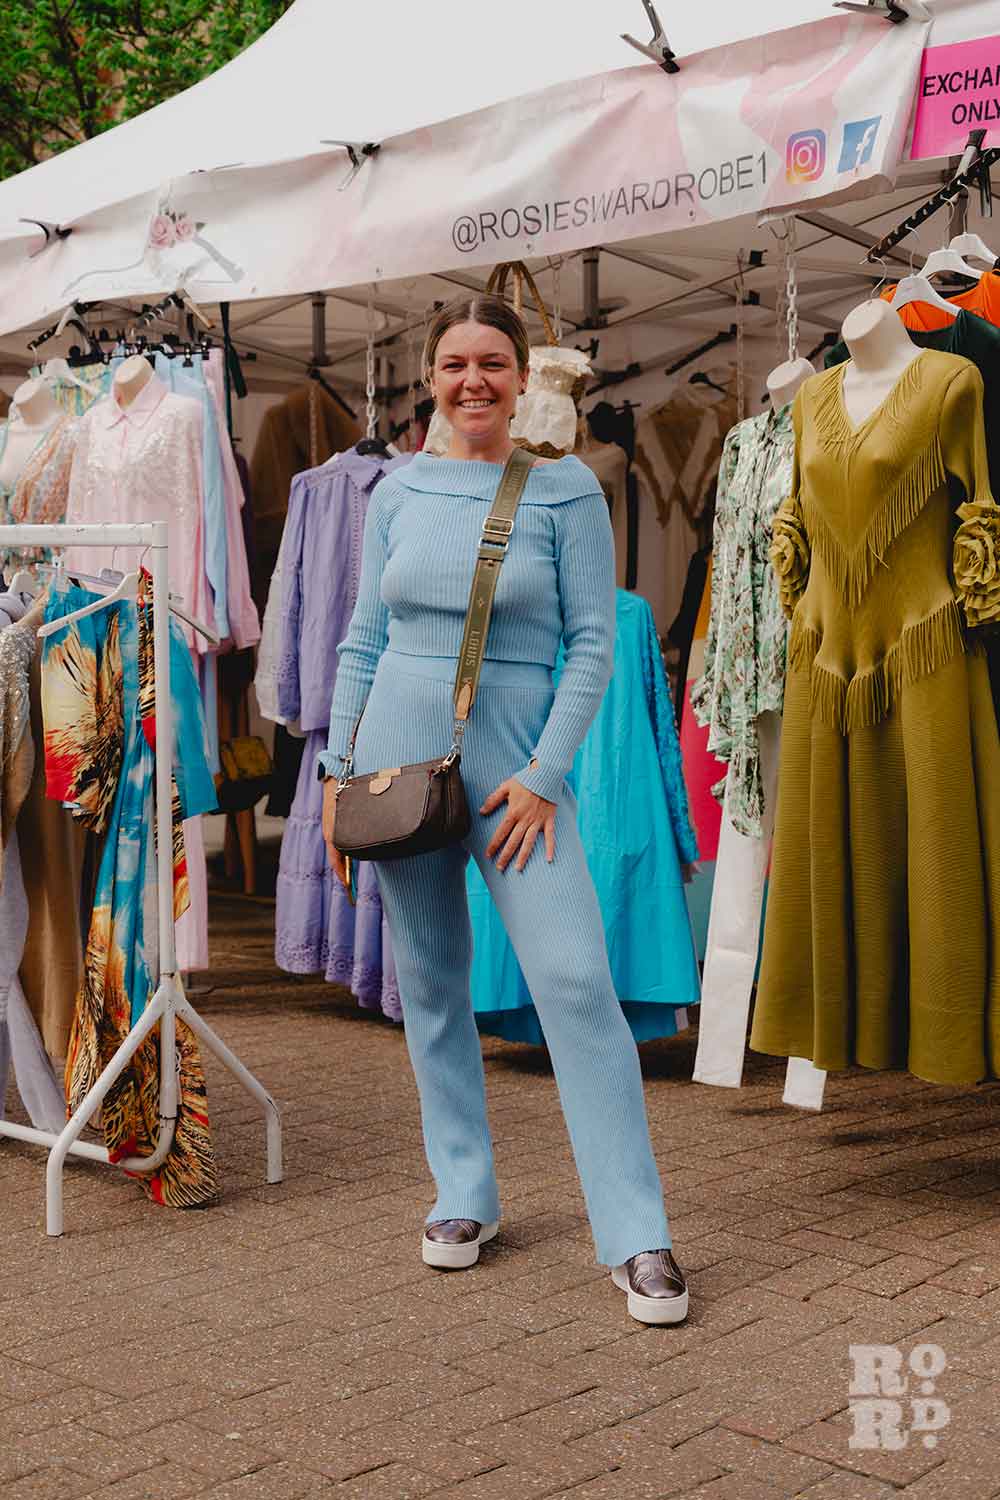 Roman Road Market trader Rosie Smyth standing outside her ladies fashion stall